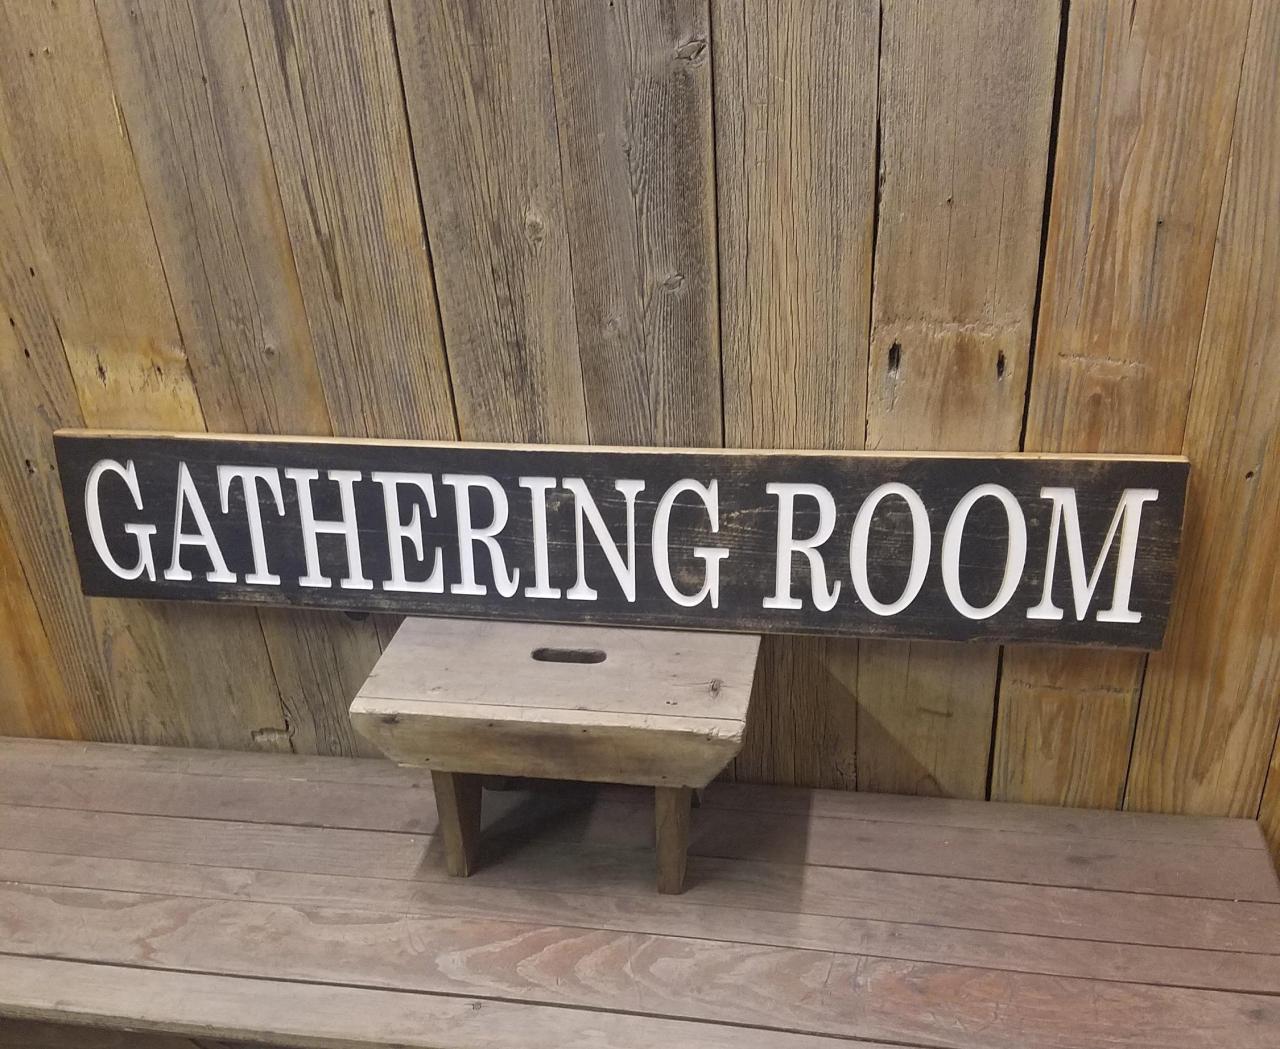 Sign dining room grain cottage wood